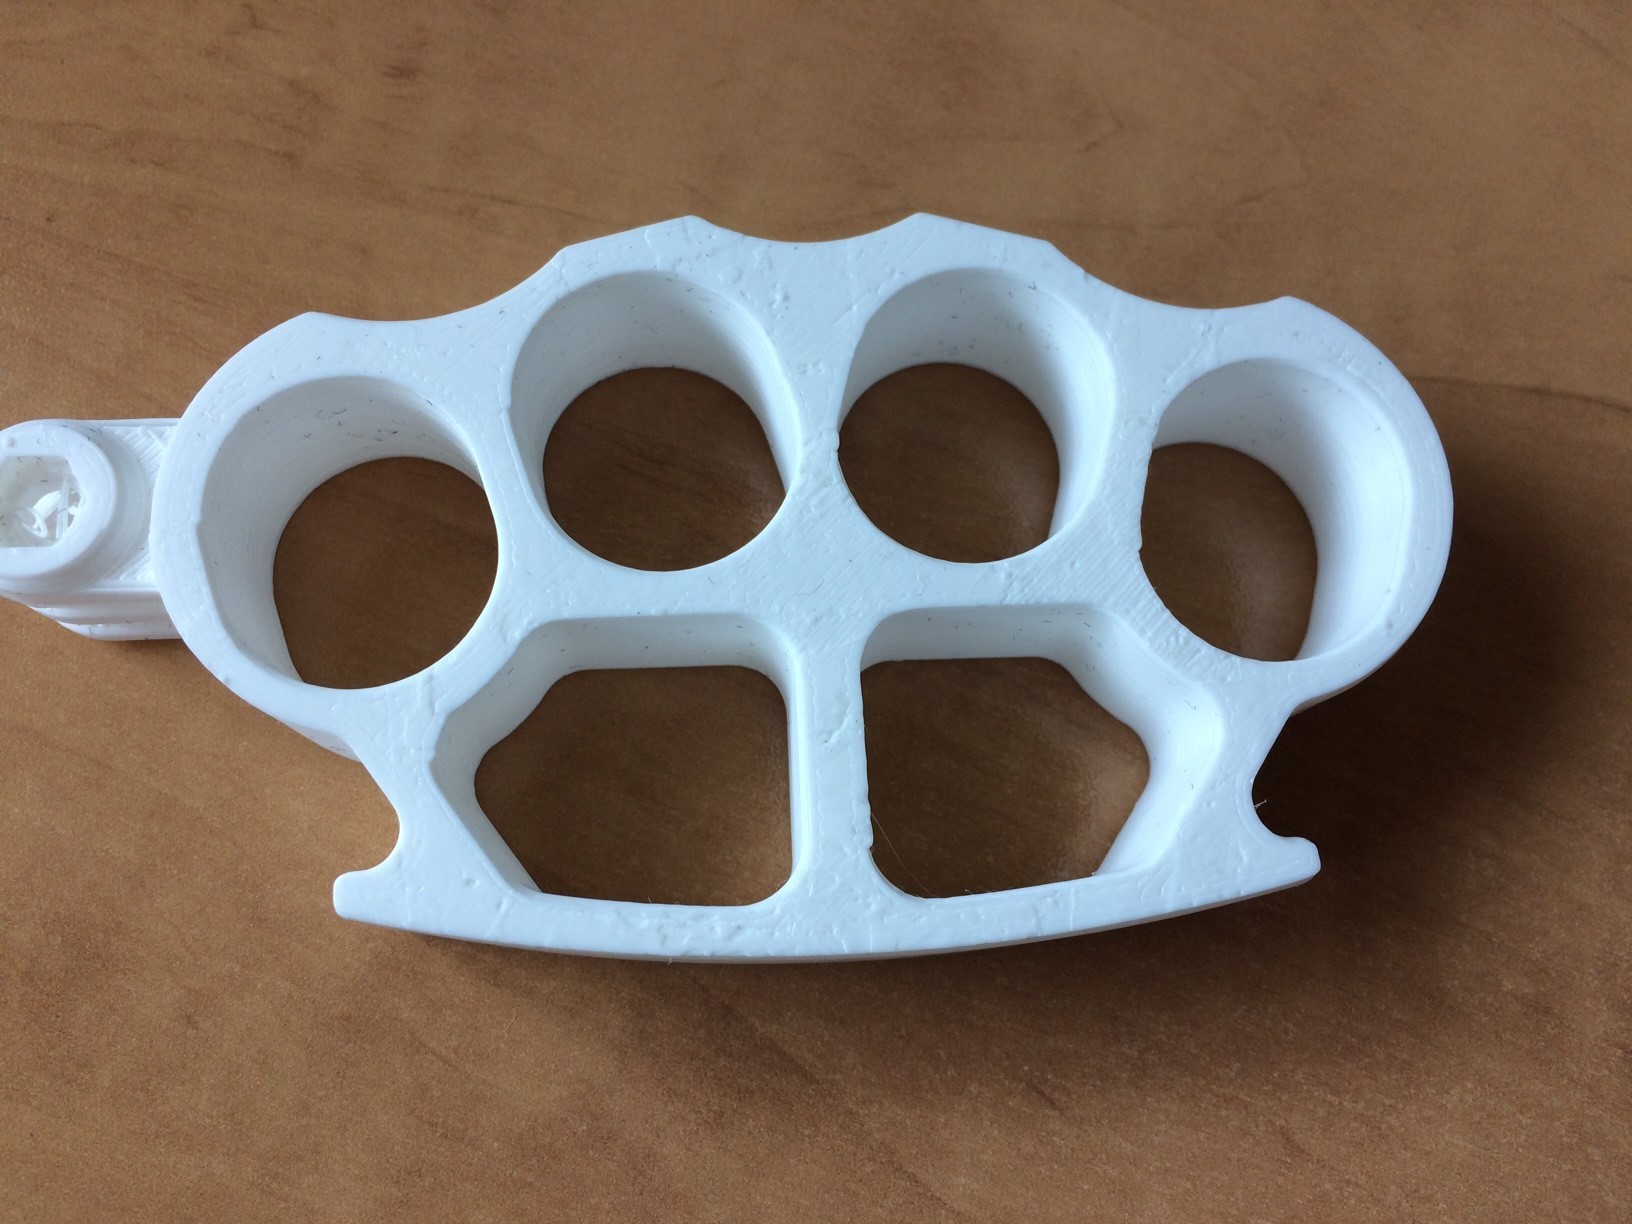 3D Printed Plastic Knuckles – OPEN SHELF